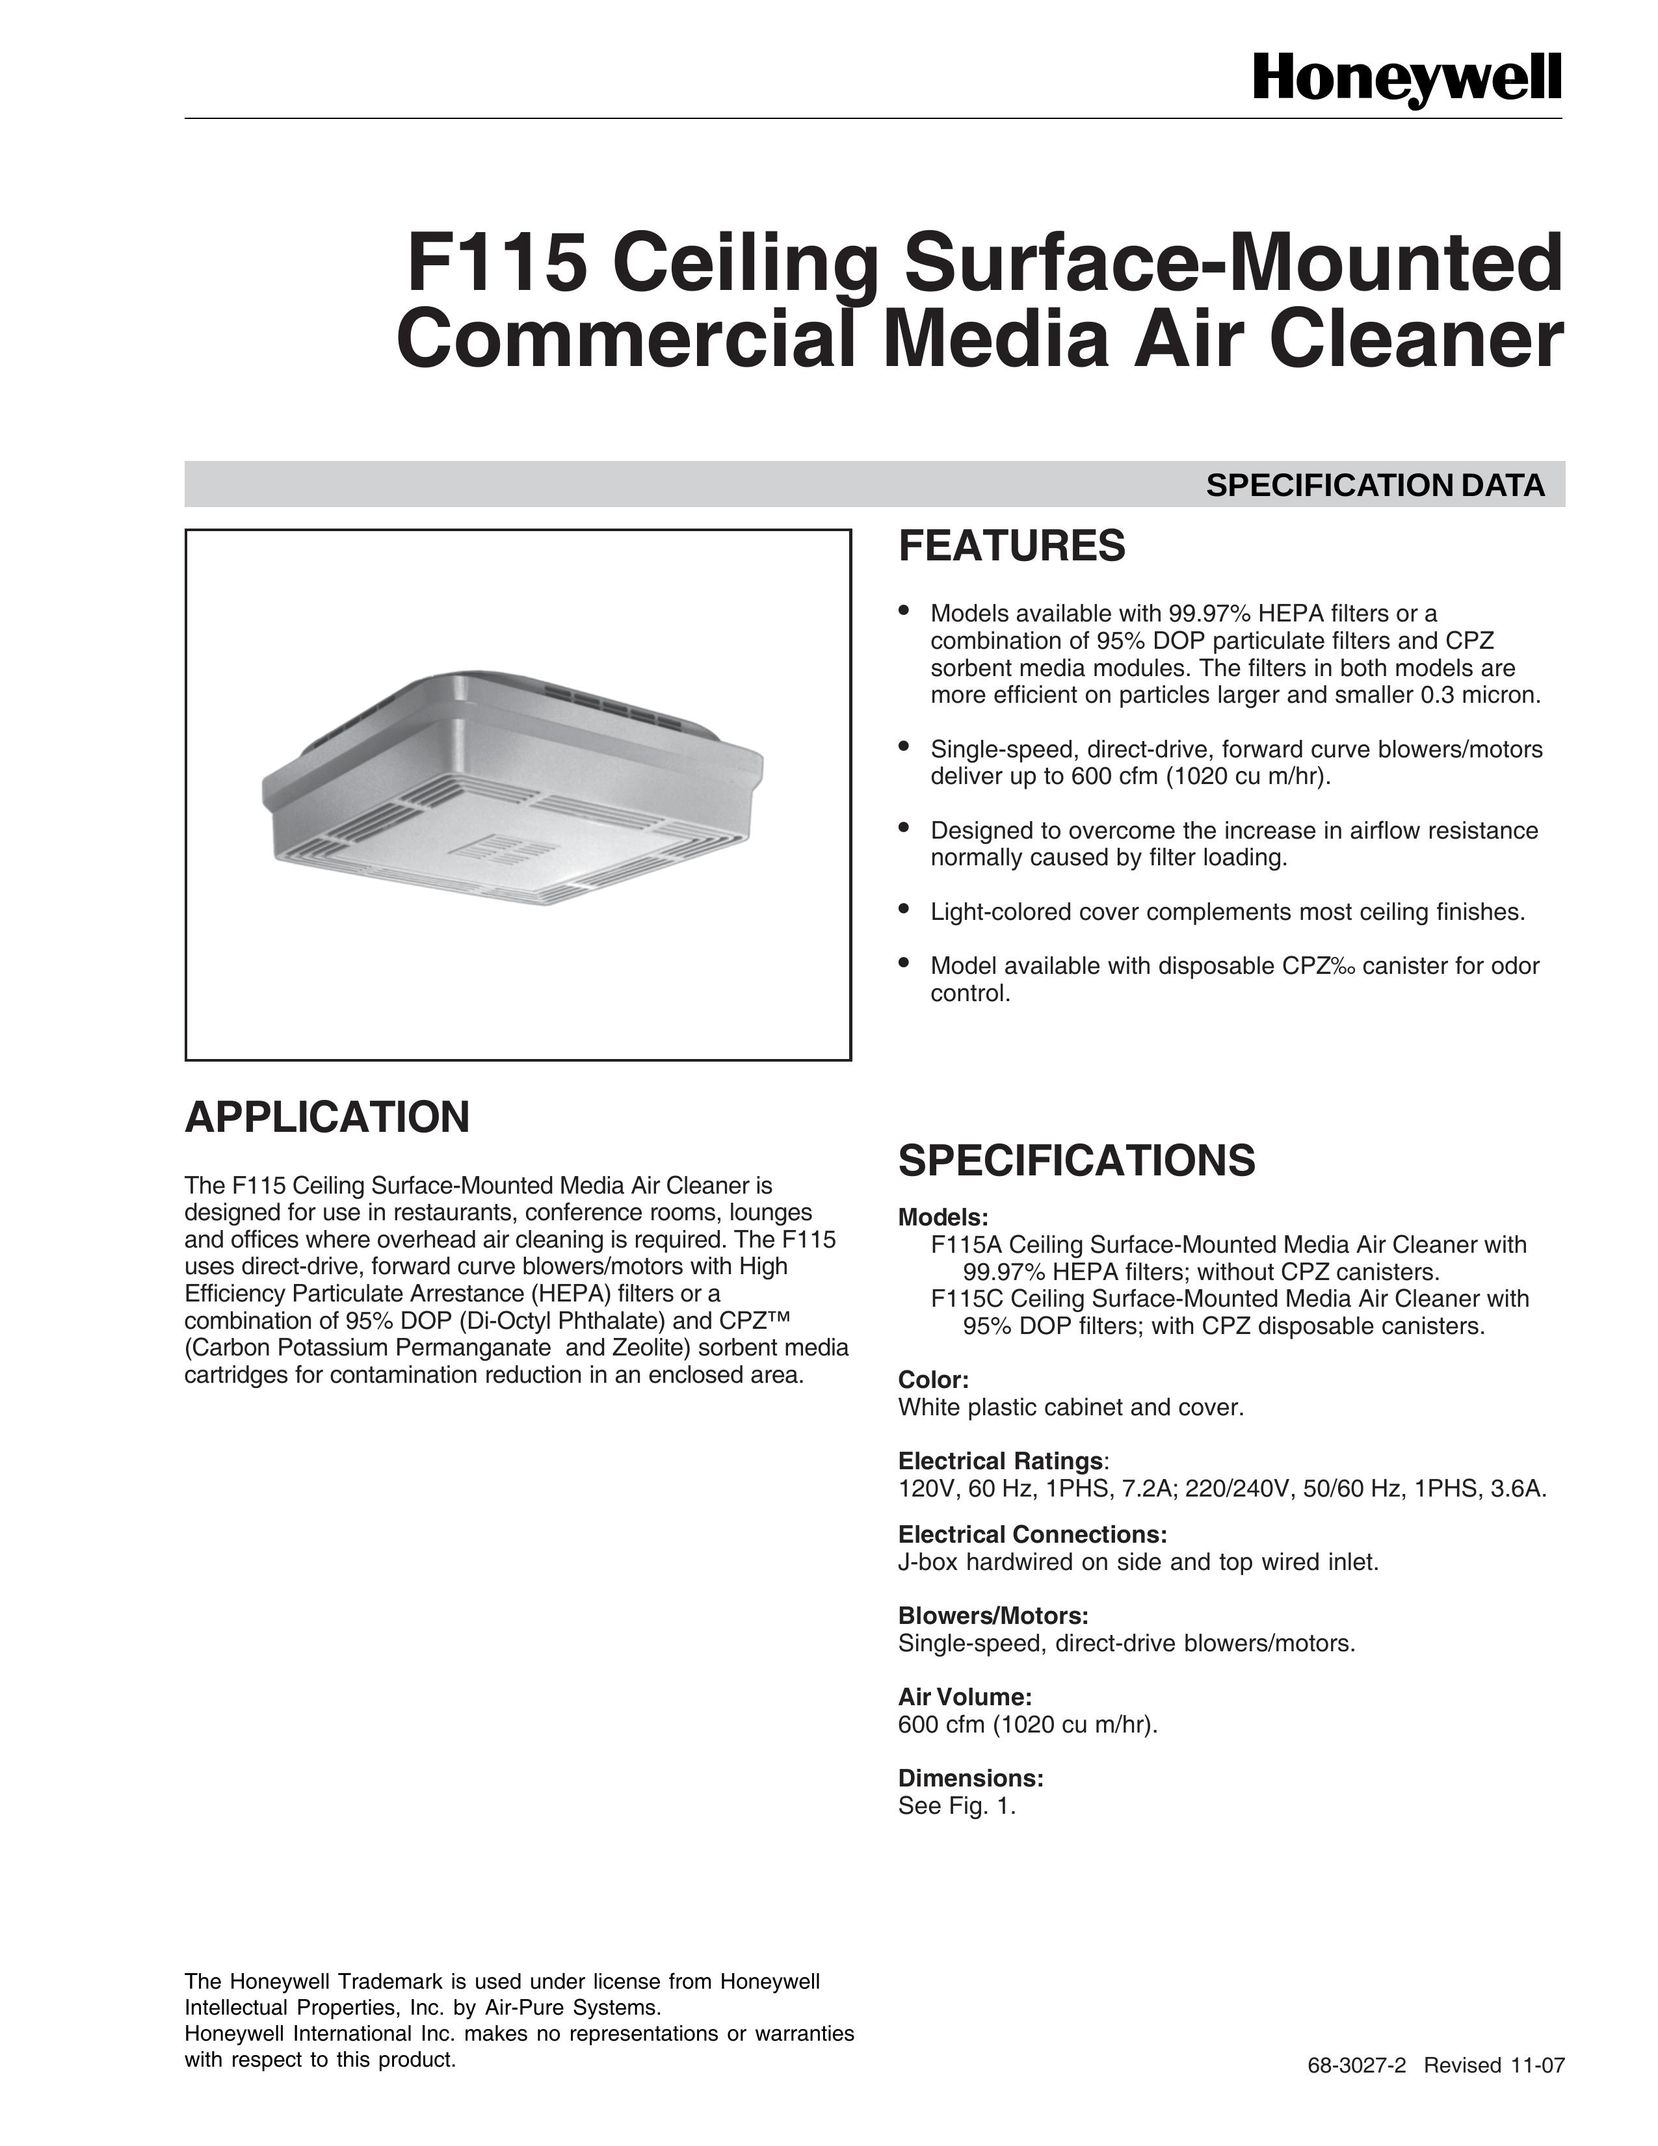 Honeywell F115 Air Cleaner User Manual